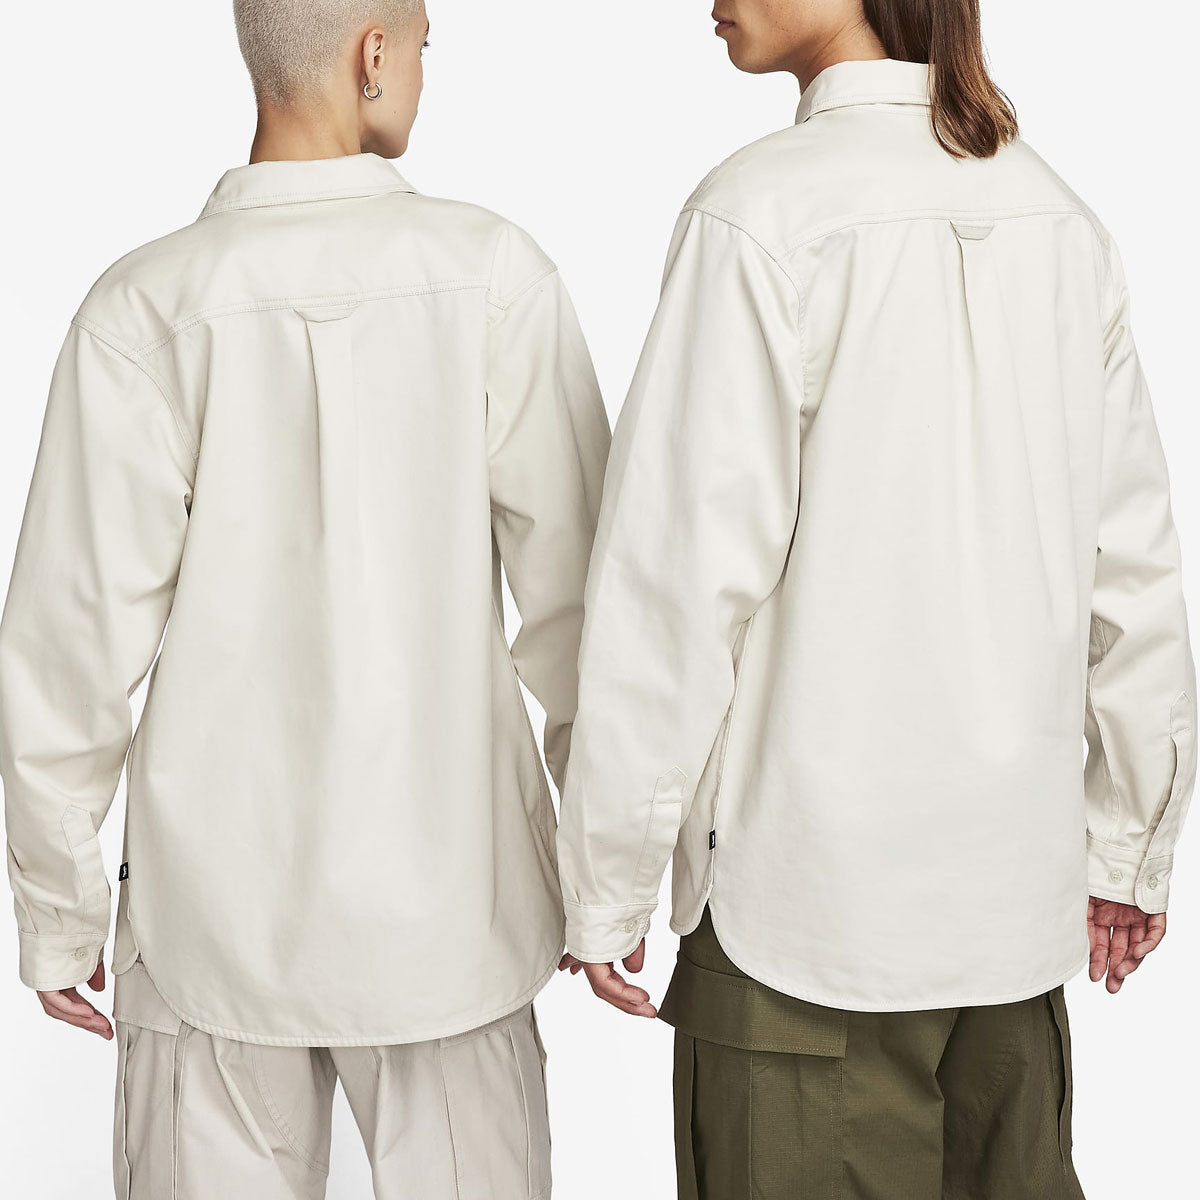 Nike SB Tanglin Long Sleeve Shirt - Light Bone image 3